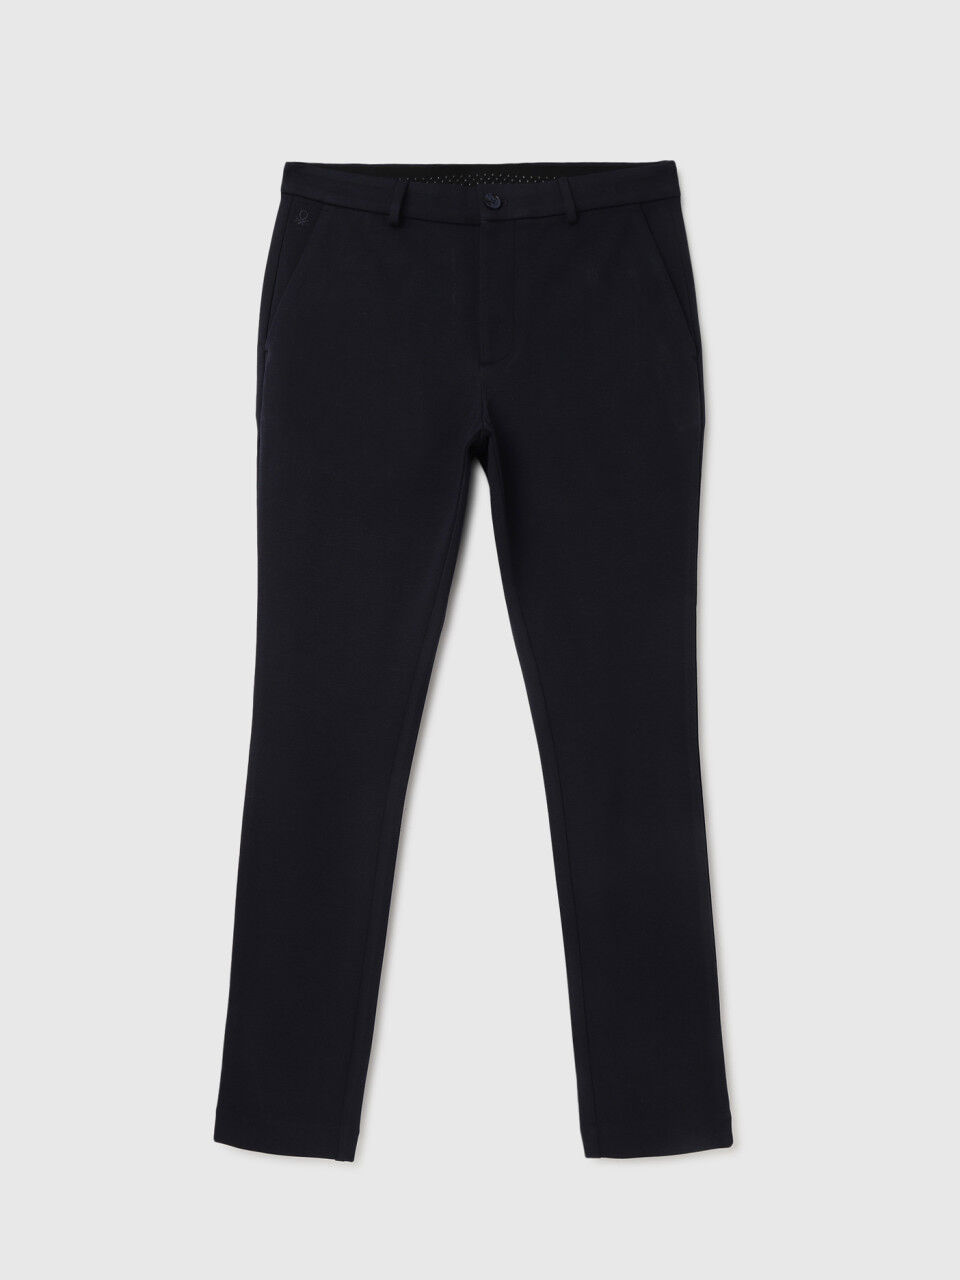 Buy Levi's Men's Slim Pants (A5275-0002_Brown at Amazon.in